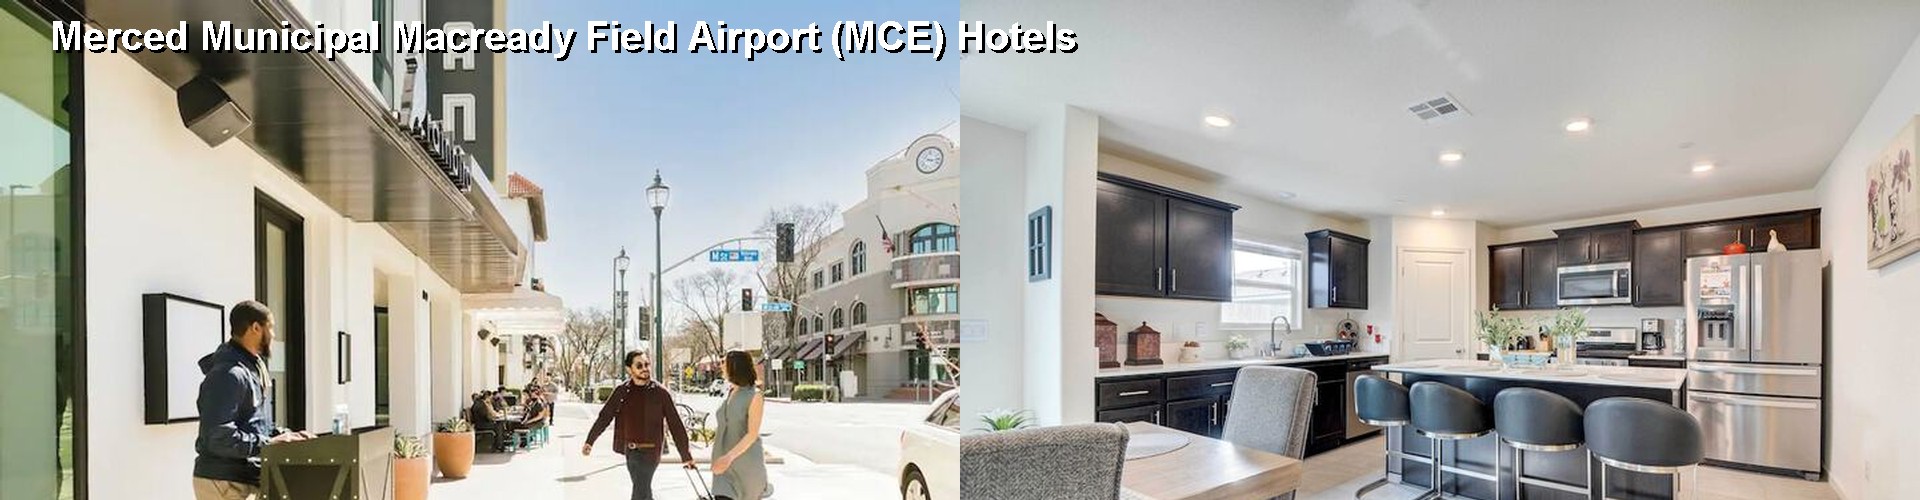 3 Best Hotels near Merced Municipal Macready Field Airport (MCE)